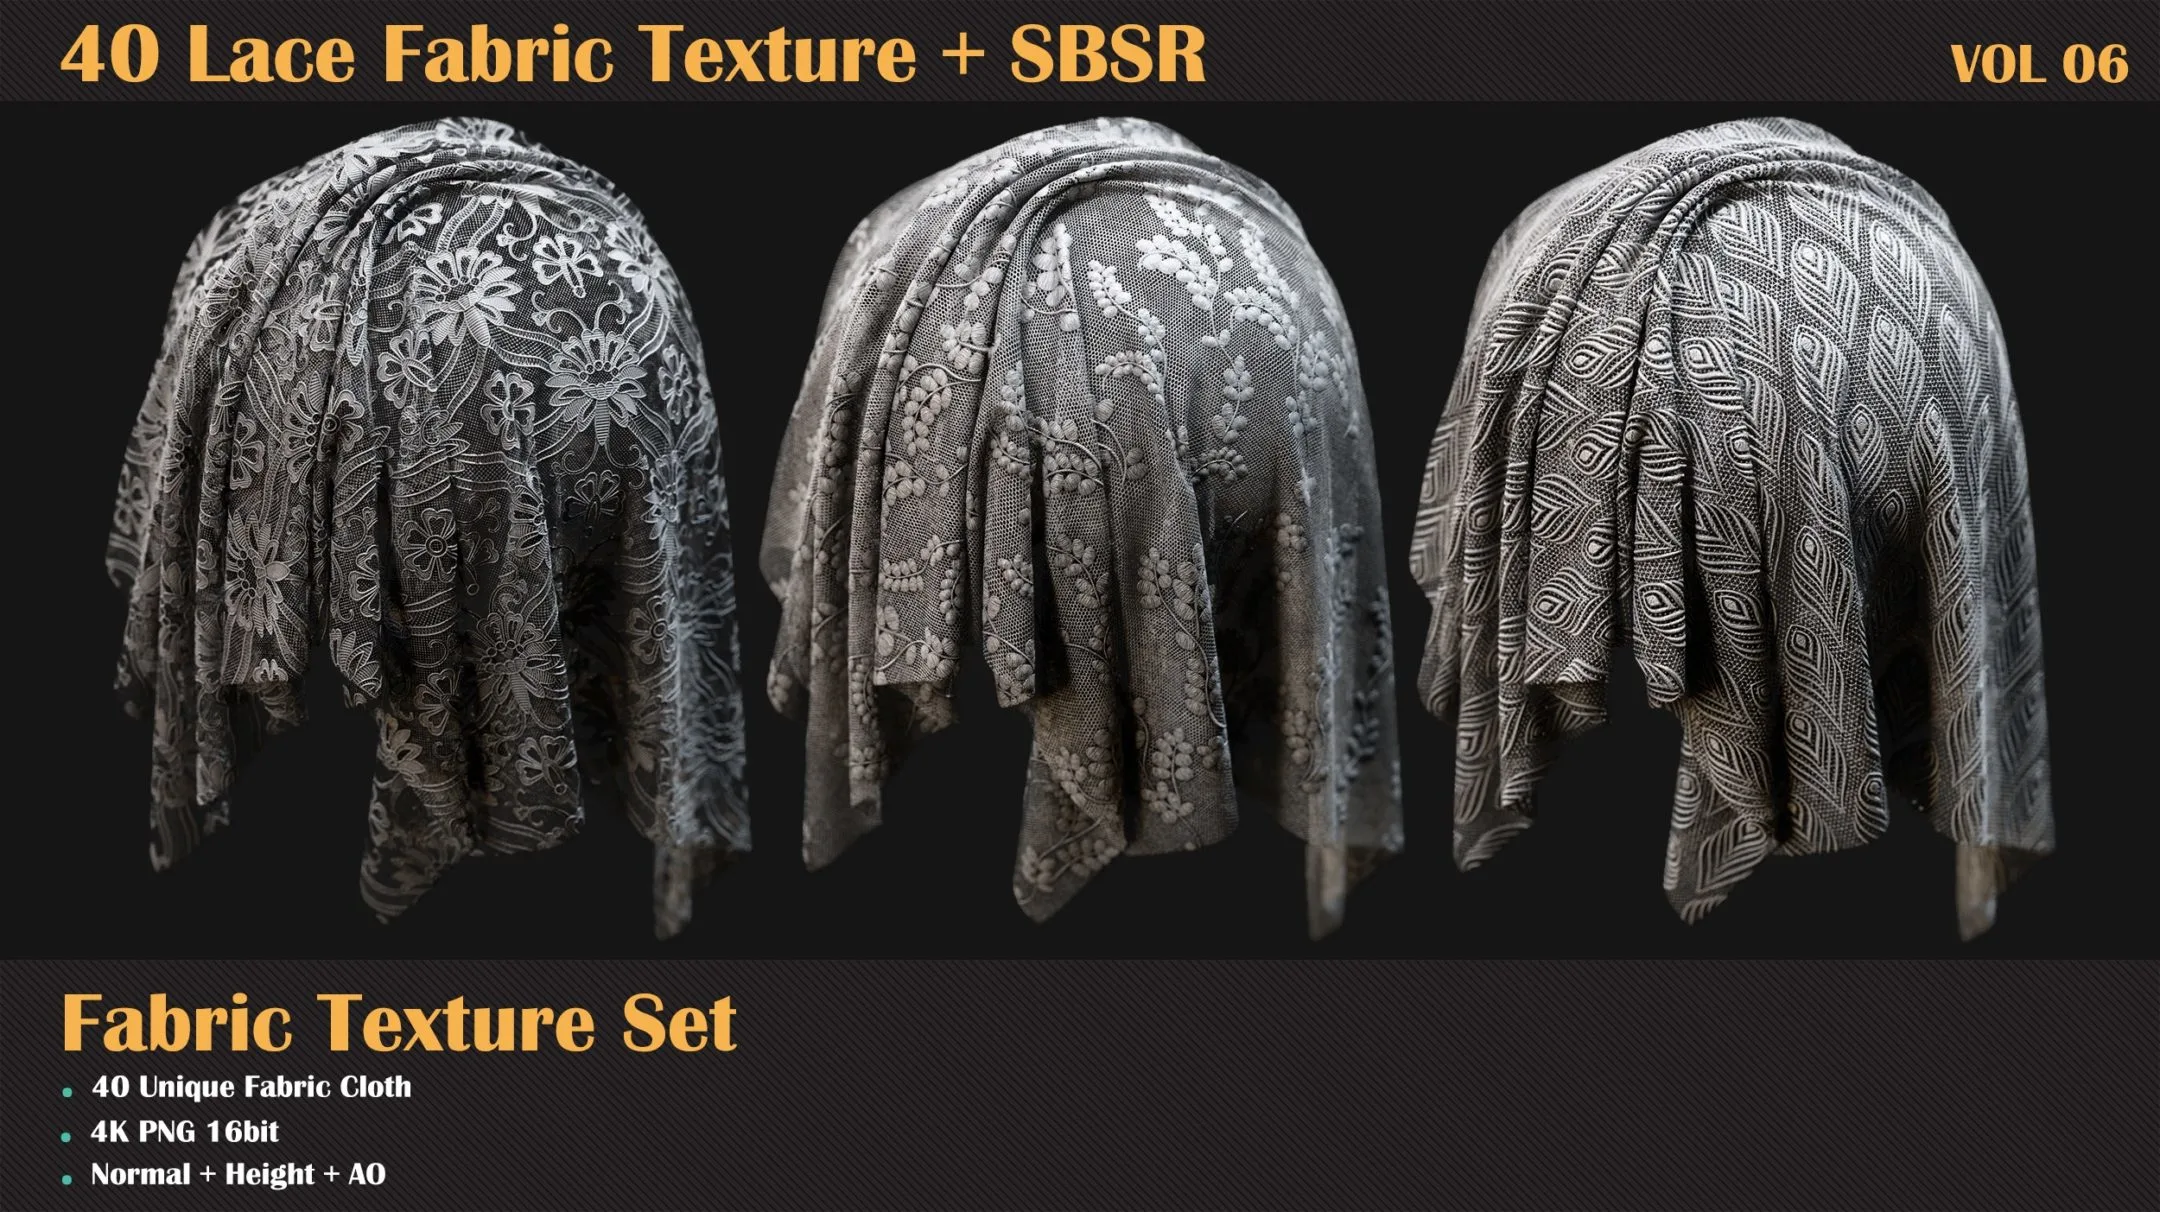 40 Lace Fabric Texture + SBSR - VOL 06